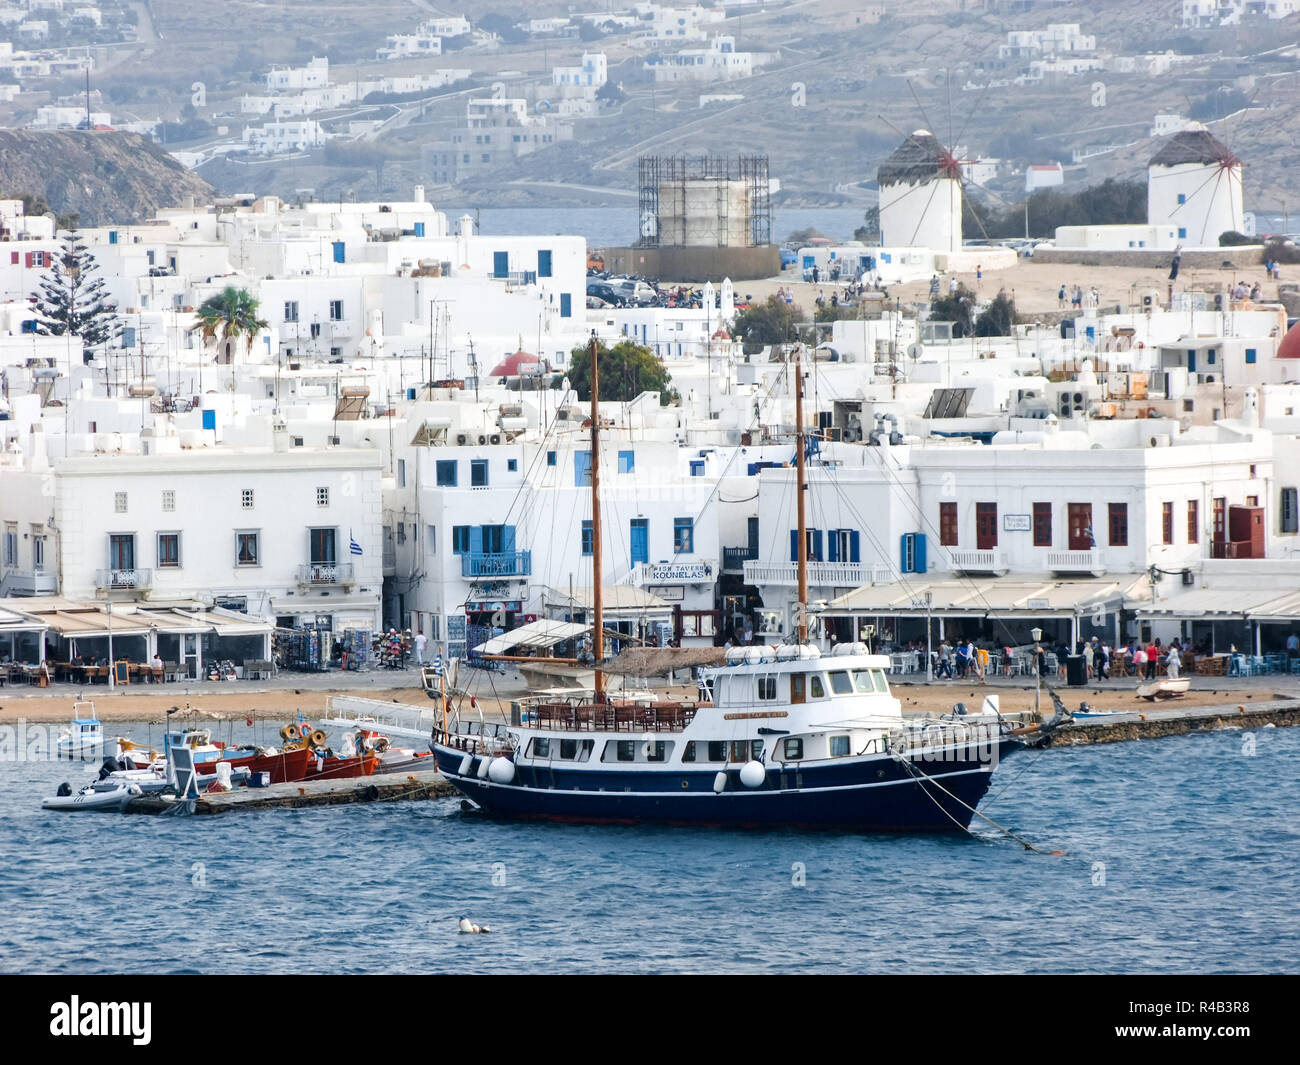 A vintage passenger sail boat docked at Santorini habor, Greece Stock Photo